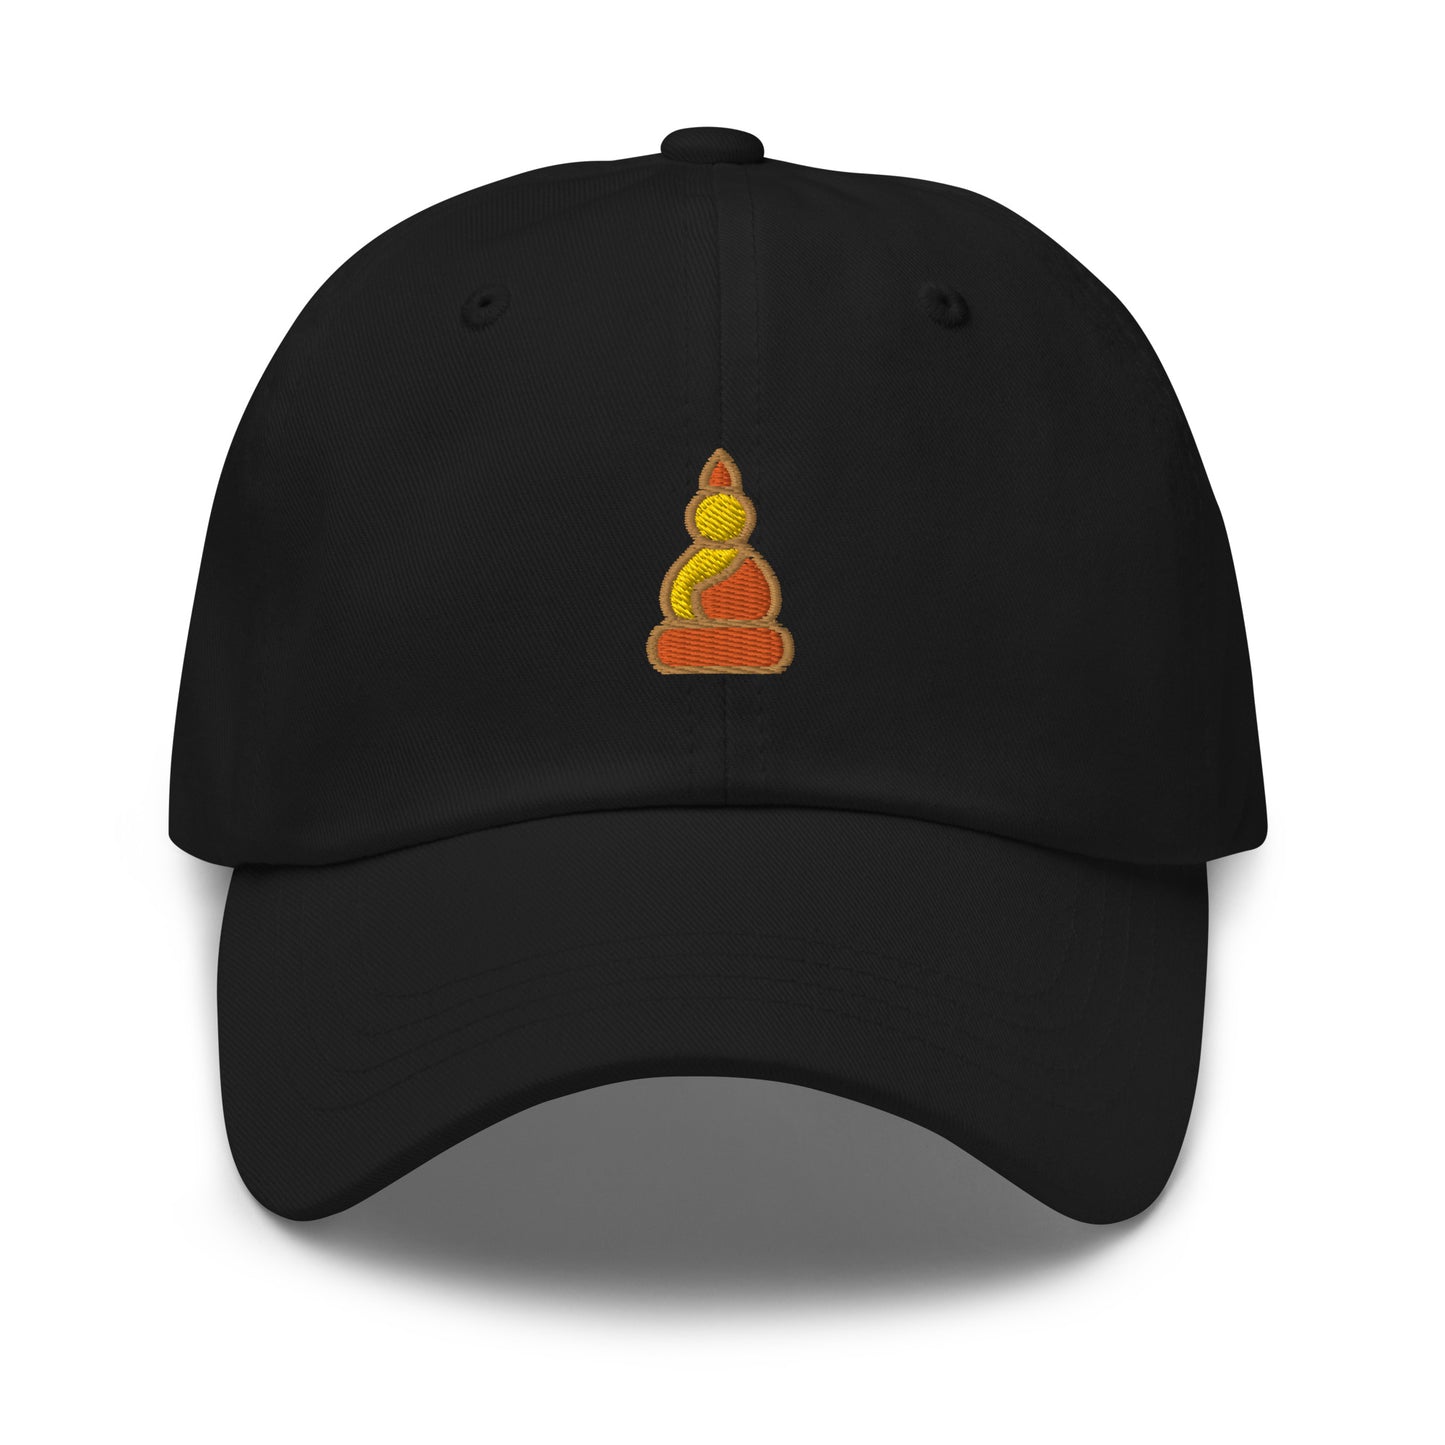 Dad Cap with Buddhism Symbol